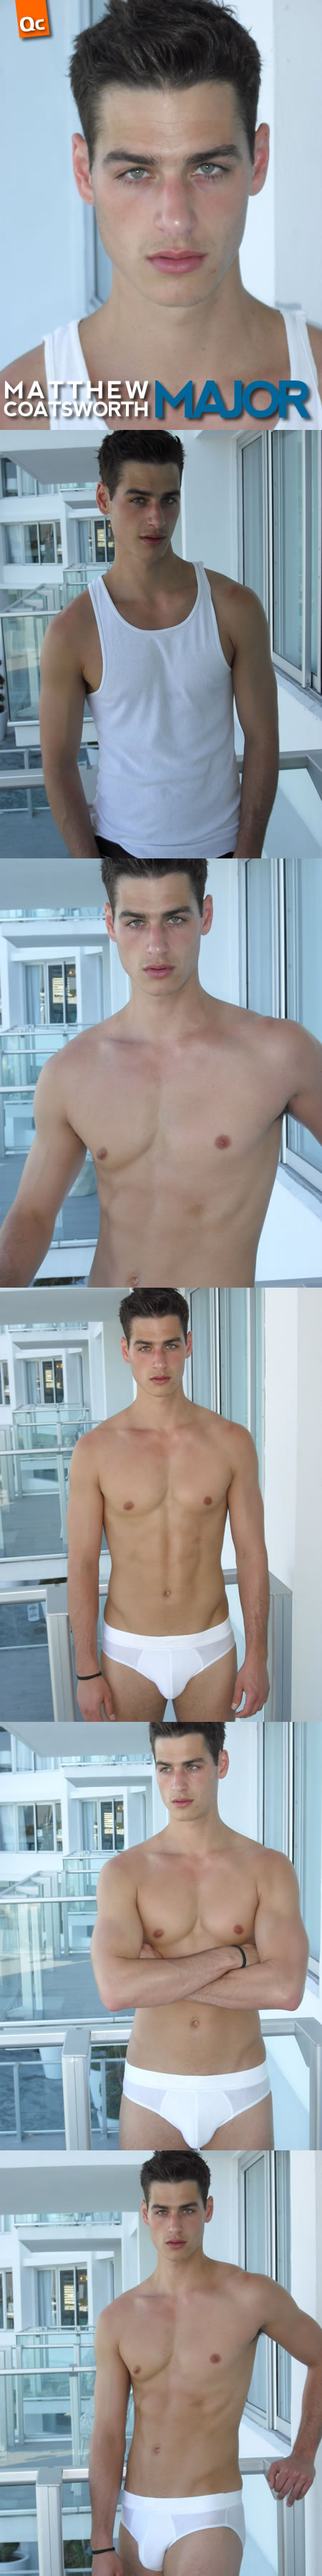 Major Models: Matthew Coatsworth